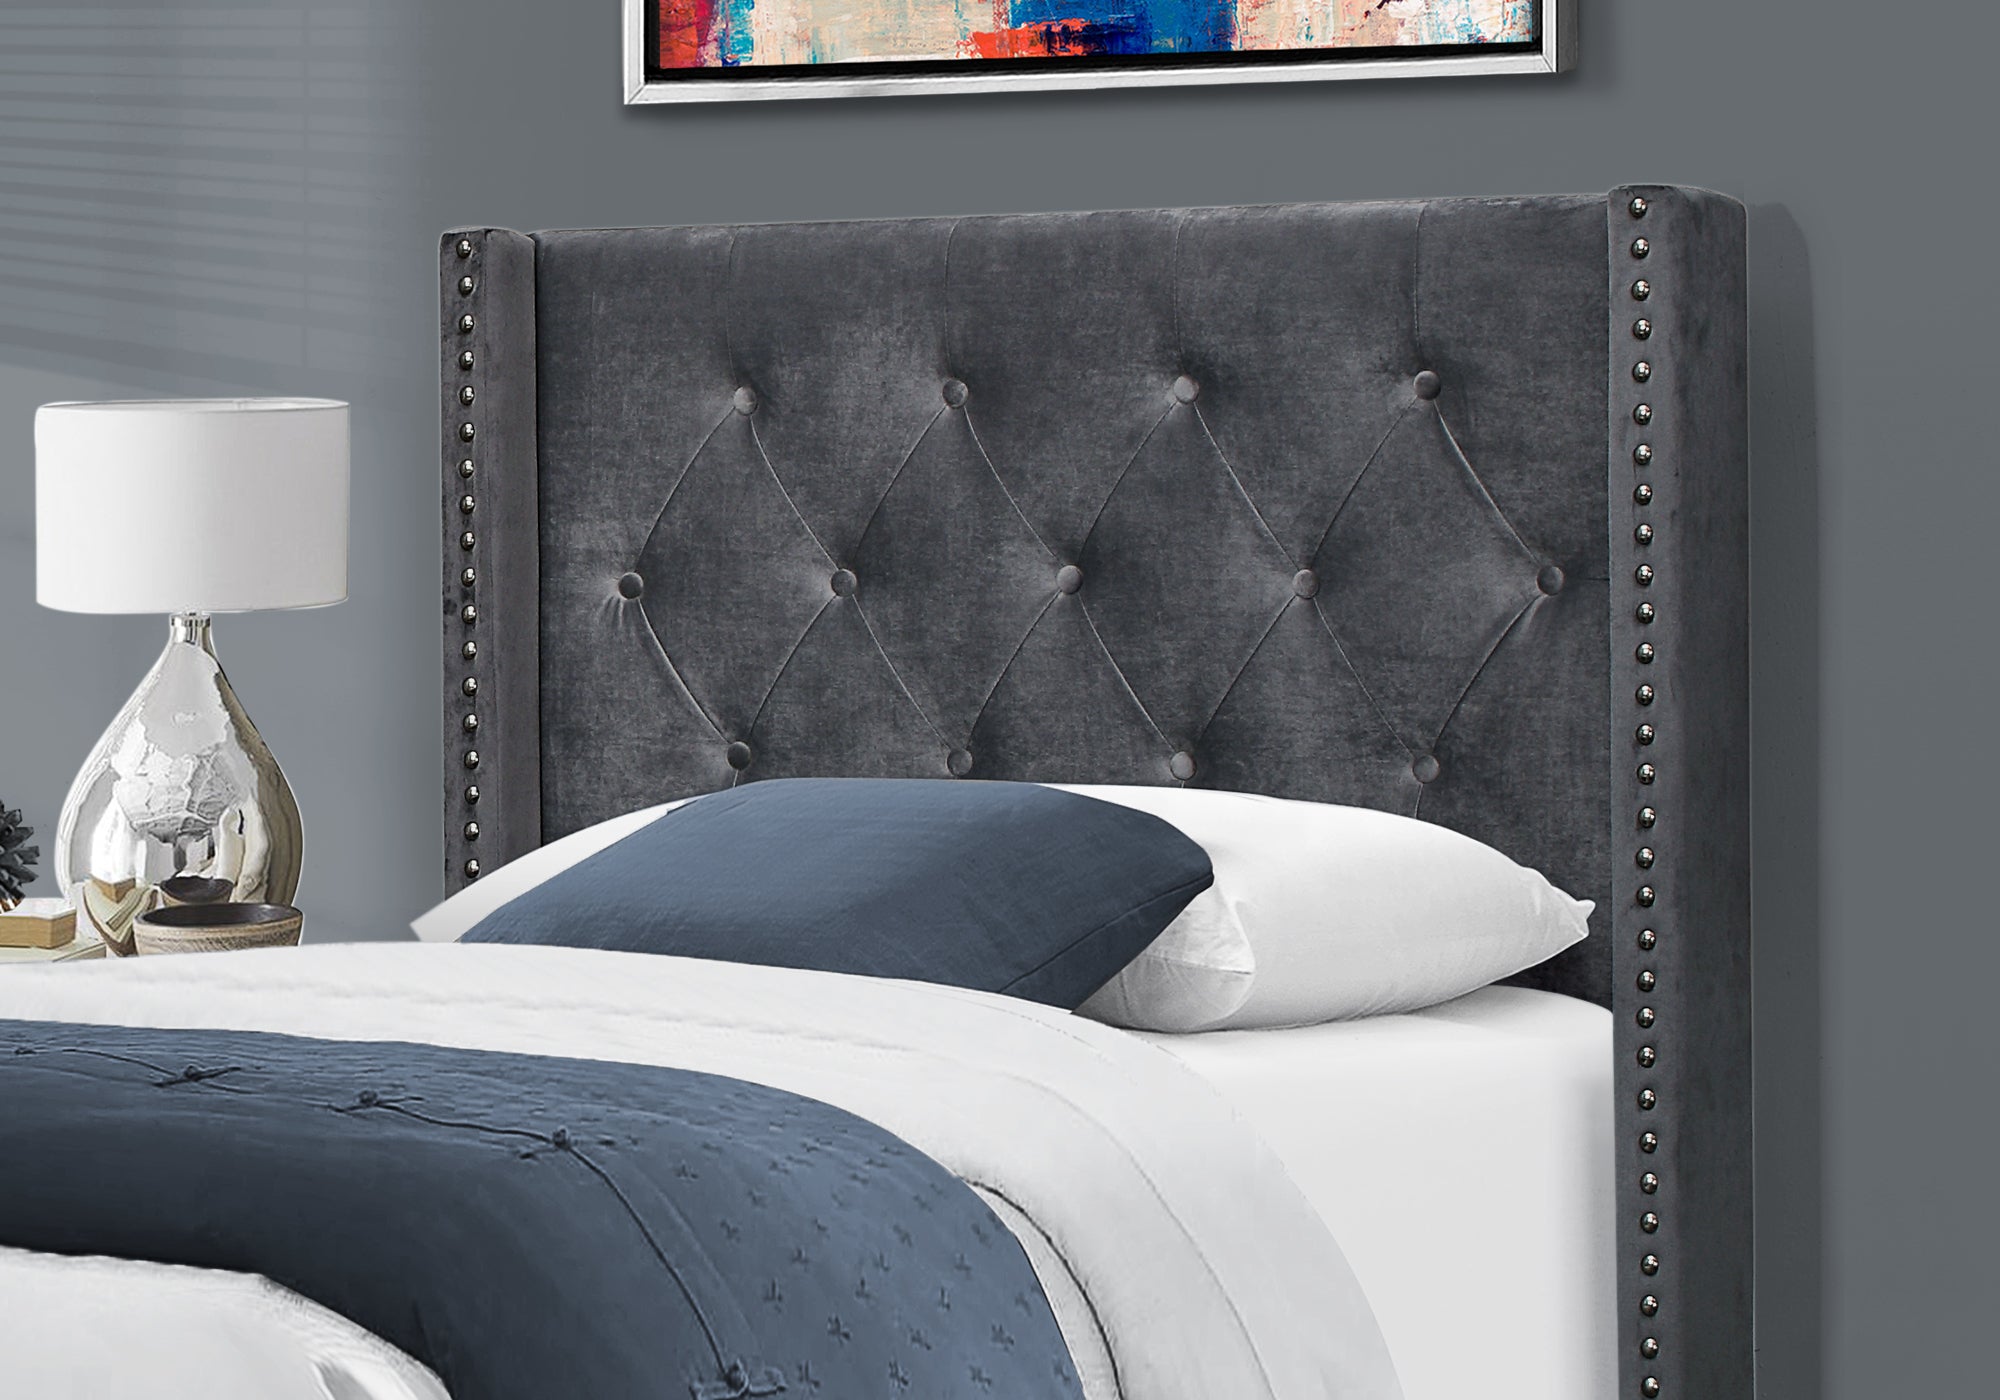 Bed - Twin Size / Dark Grey Velvet With Chrome Trim